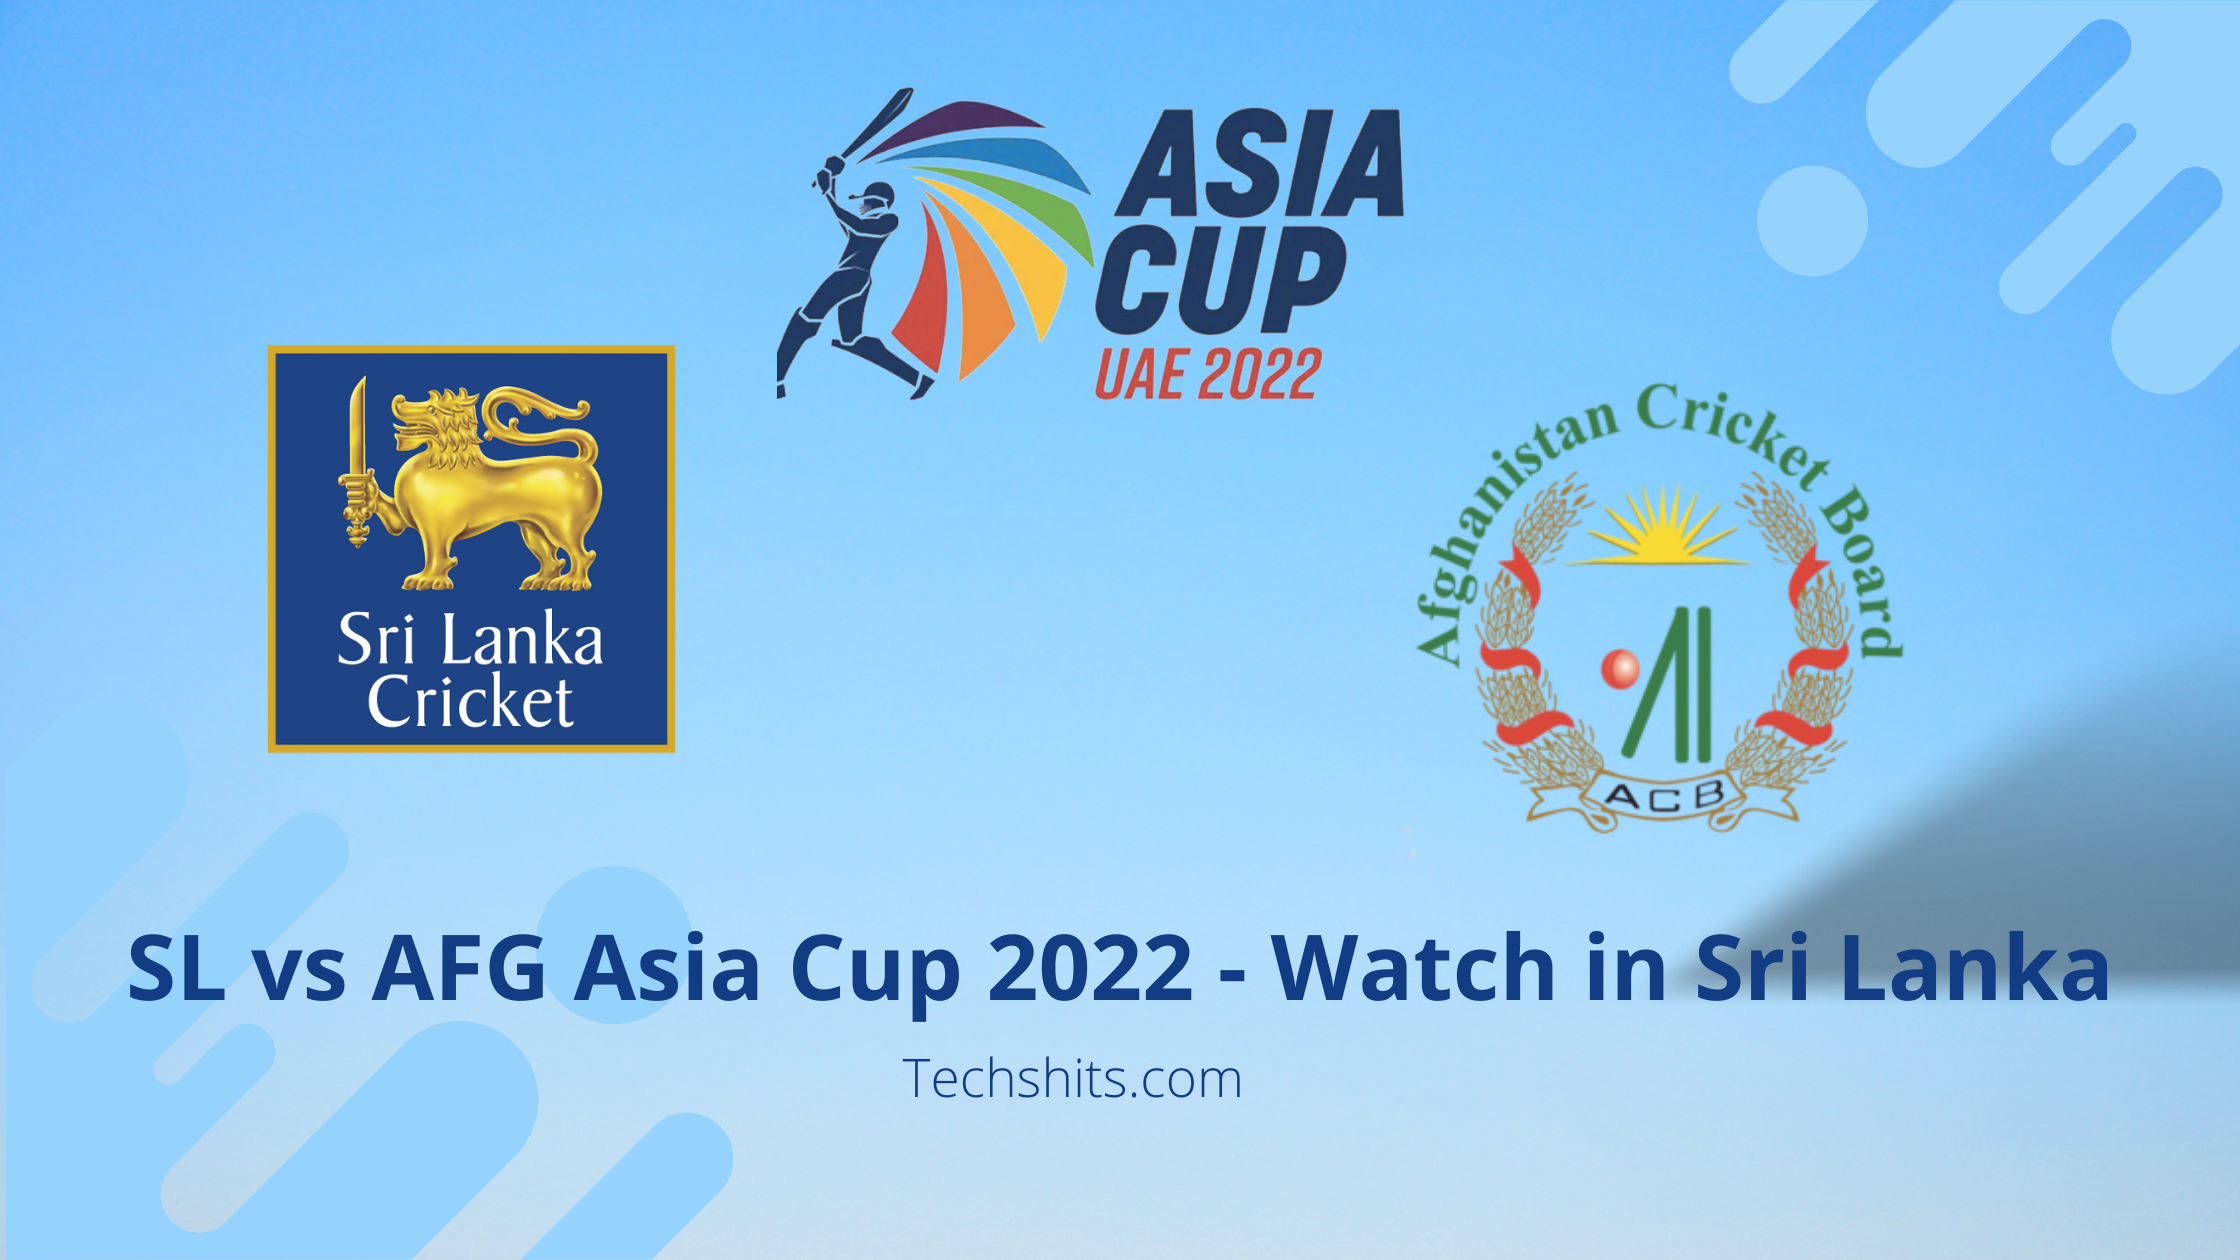 SL vs AFG Asia Cup 2022 - Watch in Sri Lanka